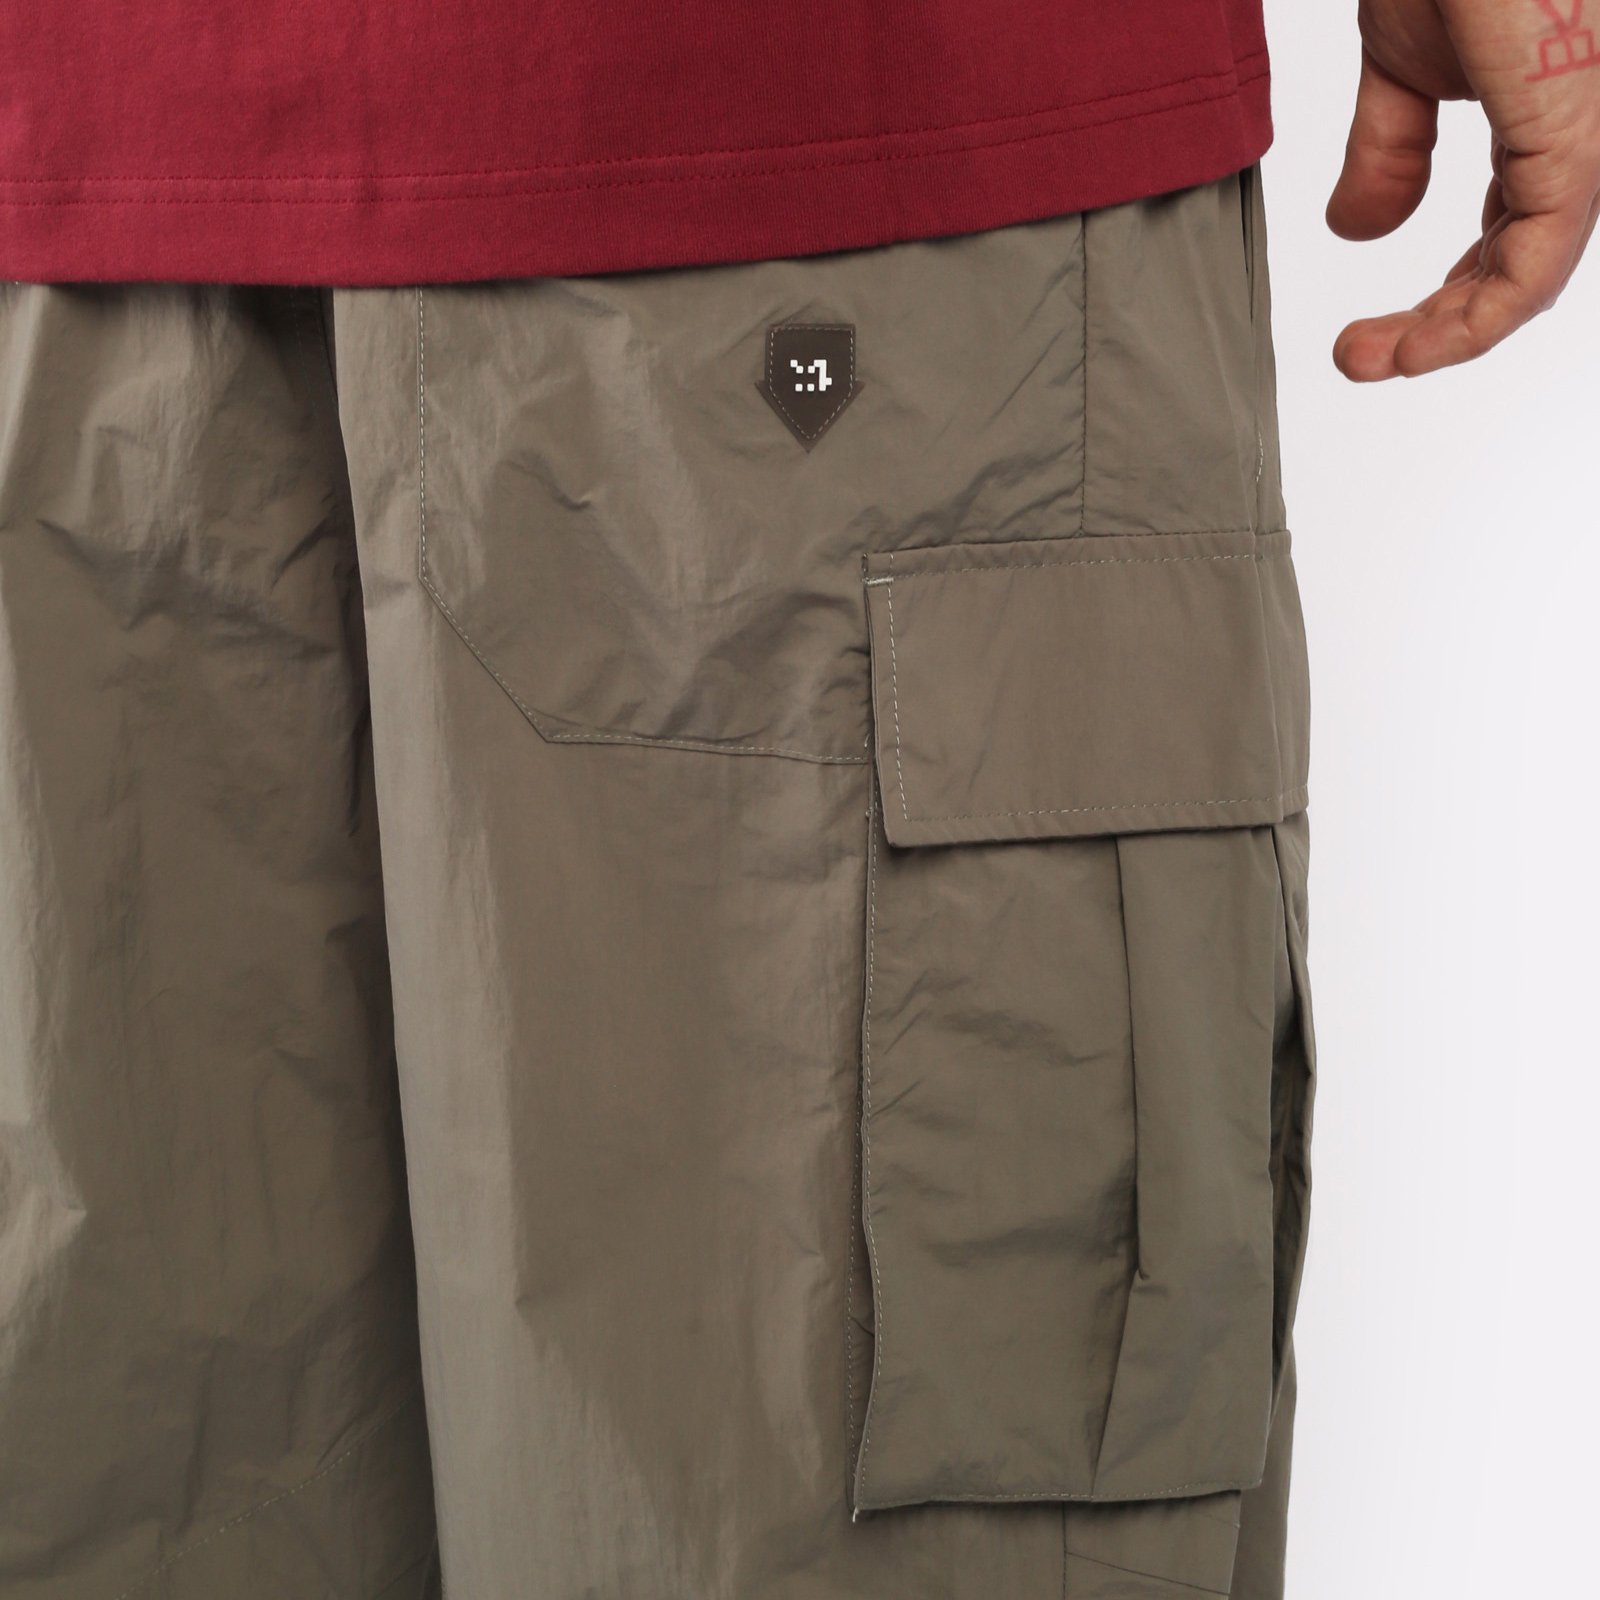 мужские серые брюки KRAKATAU Rm176-52 Rm176-52-елово-сер - цена, описание, фото 4